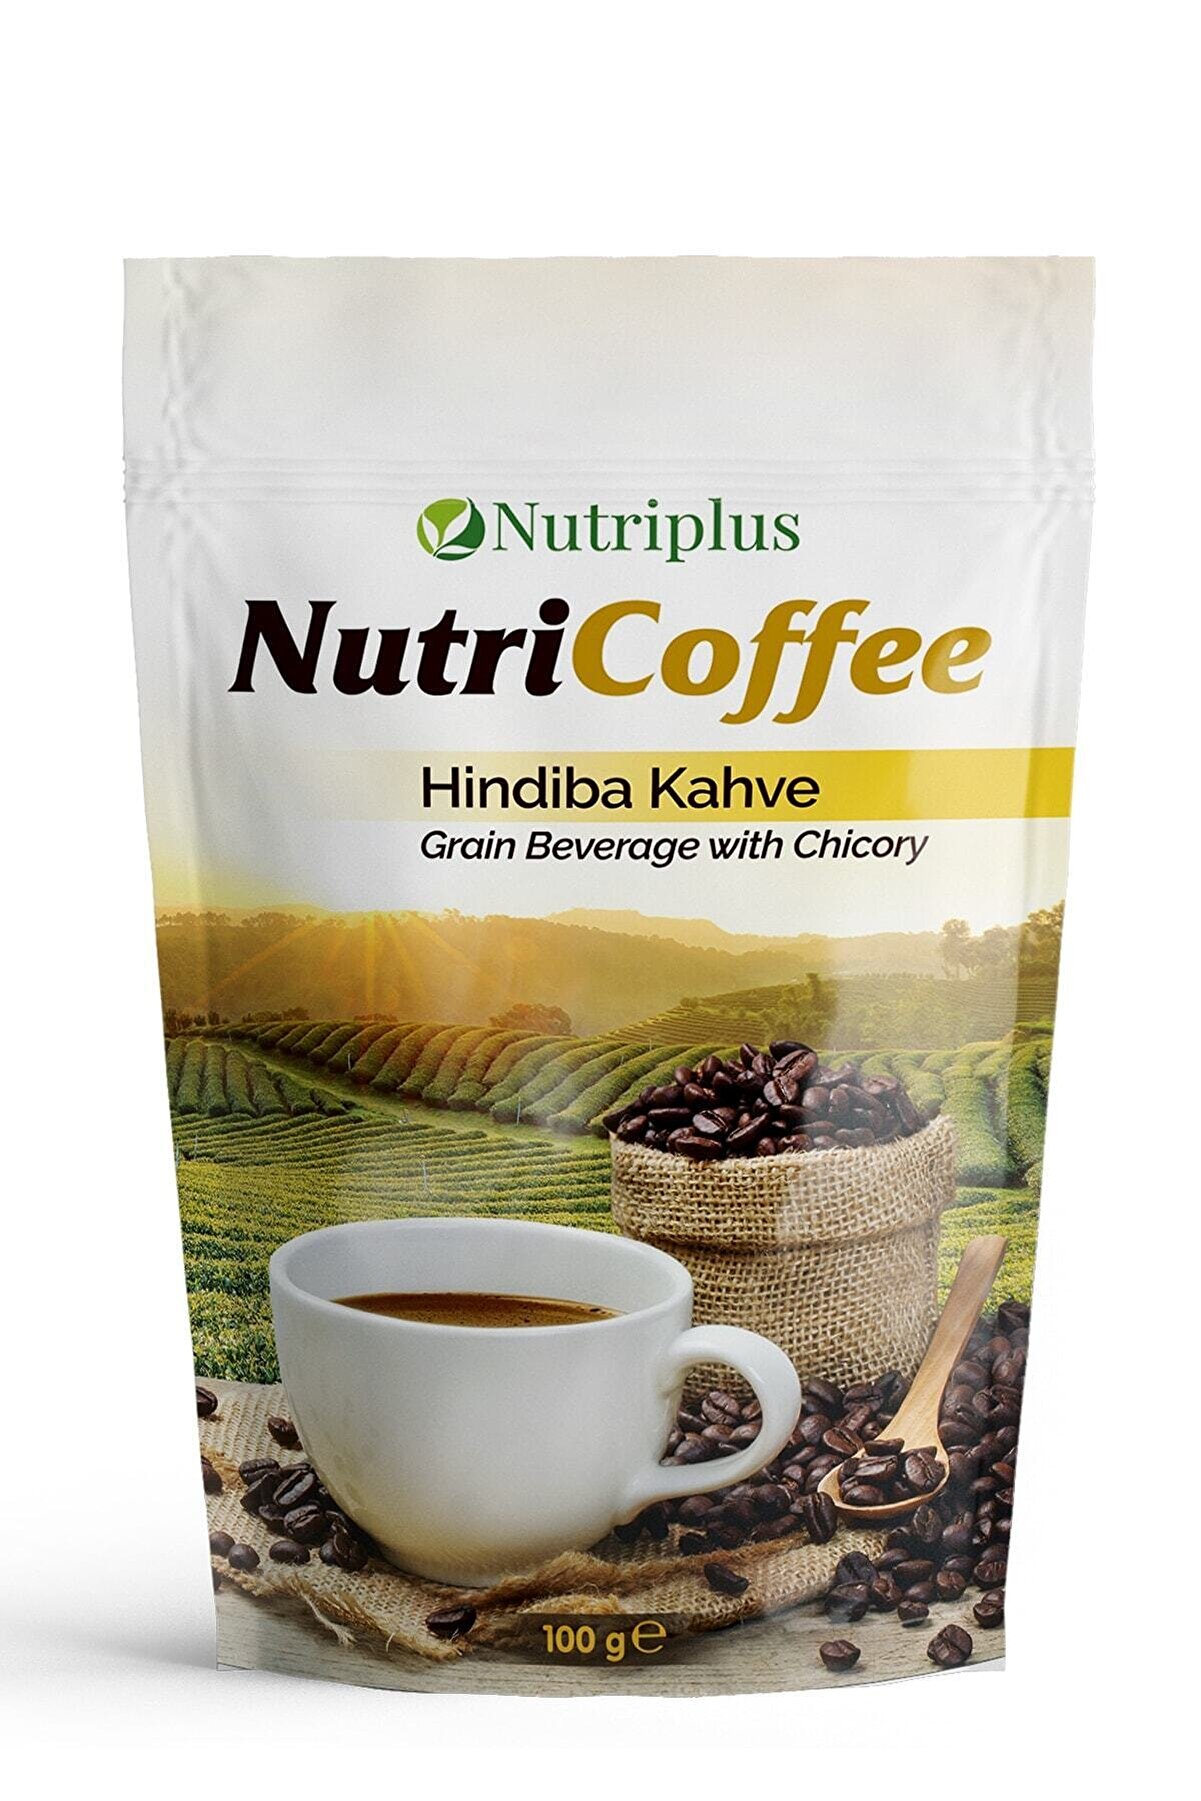 Farmasi Nutriplus NutriCoffee Hindiba Kahve - 100 g 8690131412289